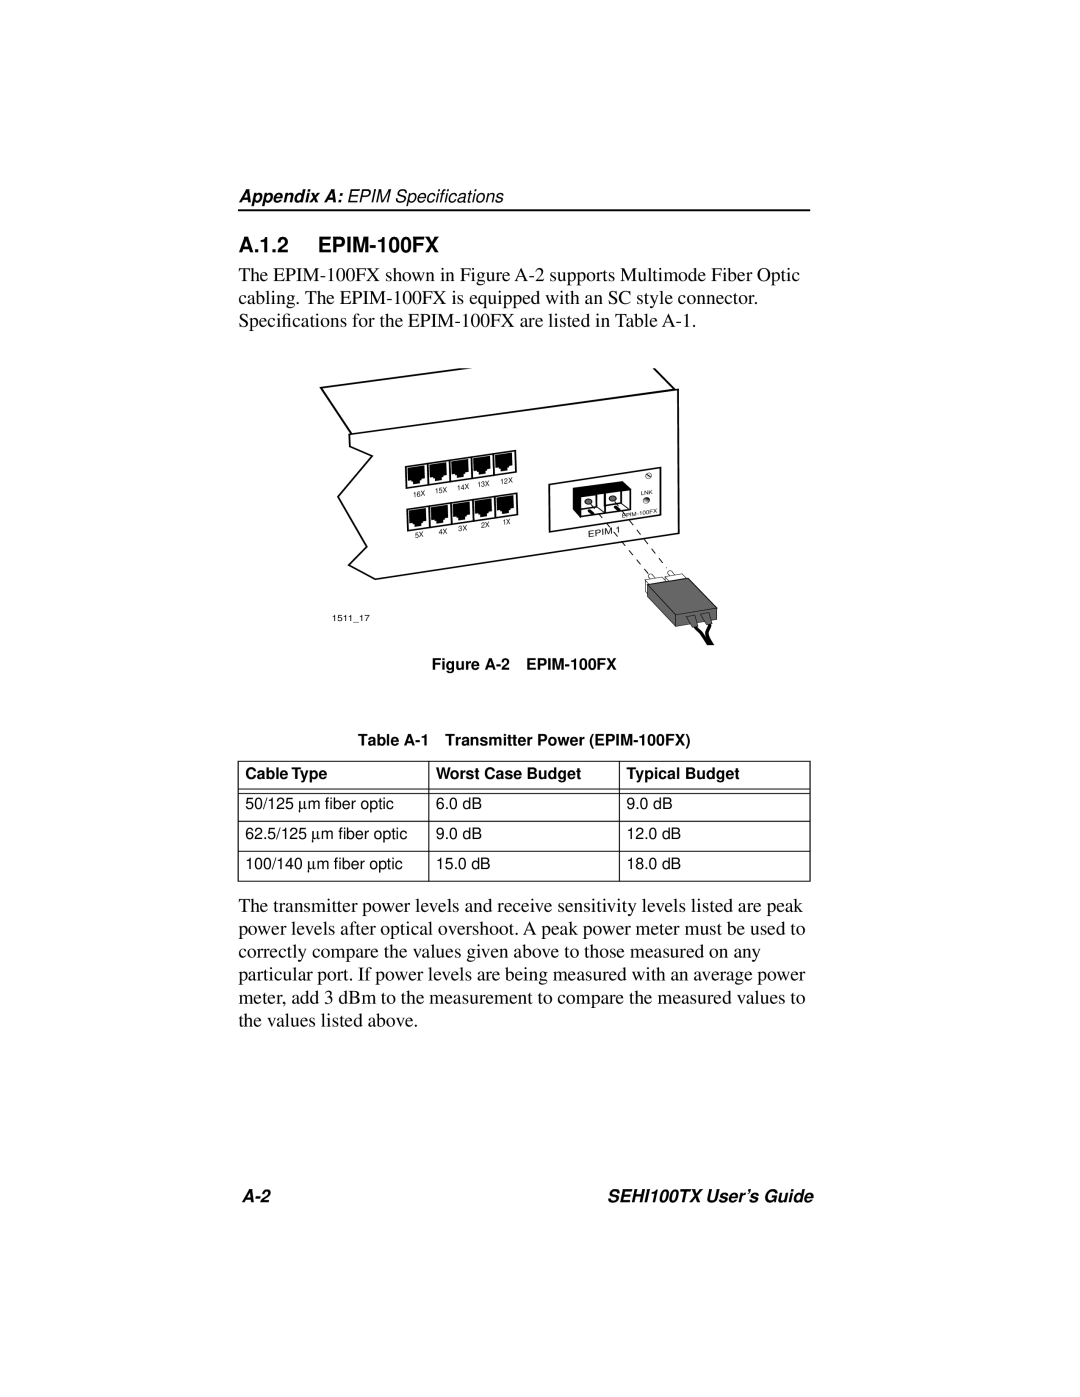 Cabletron Systems SEHI100TX-22 manual A.1.2 EPIM-100FX, Appendix A EPIM Speciﬁcations 